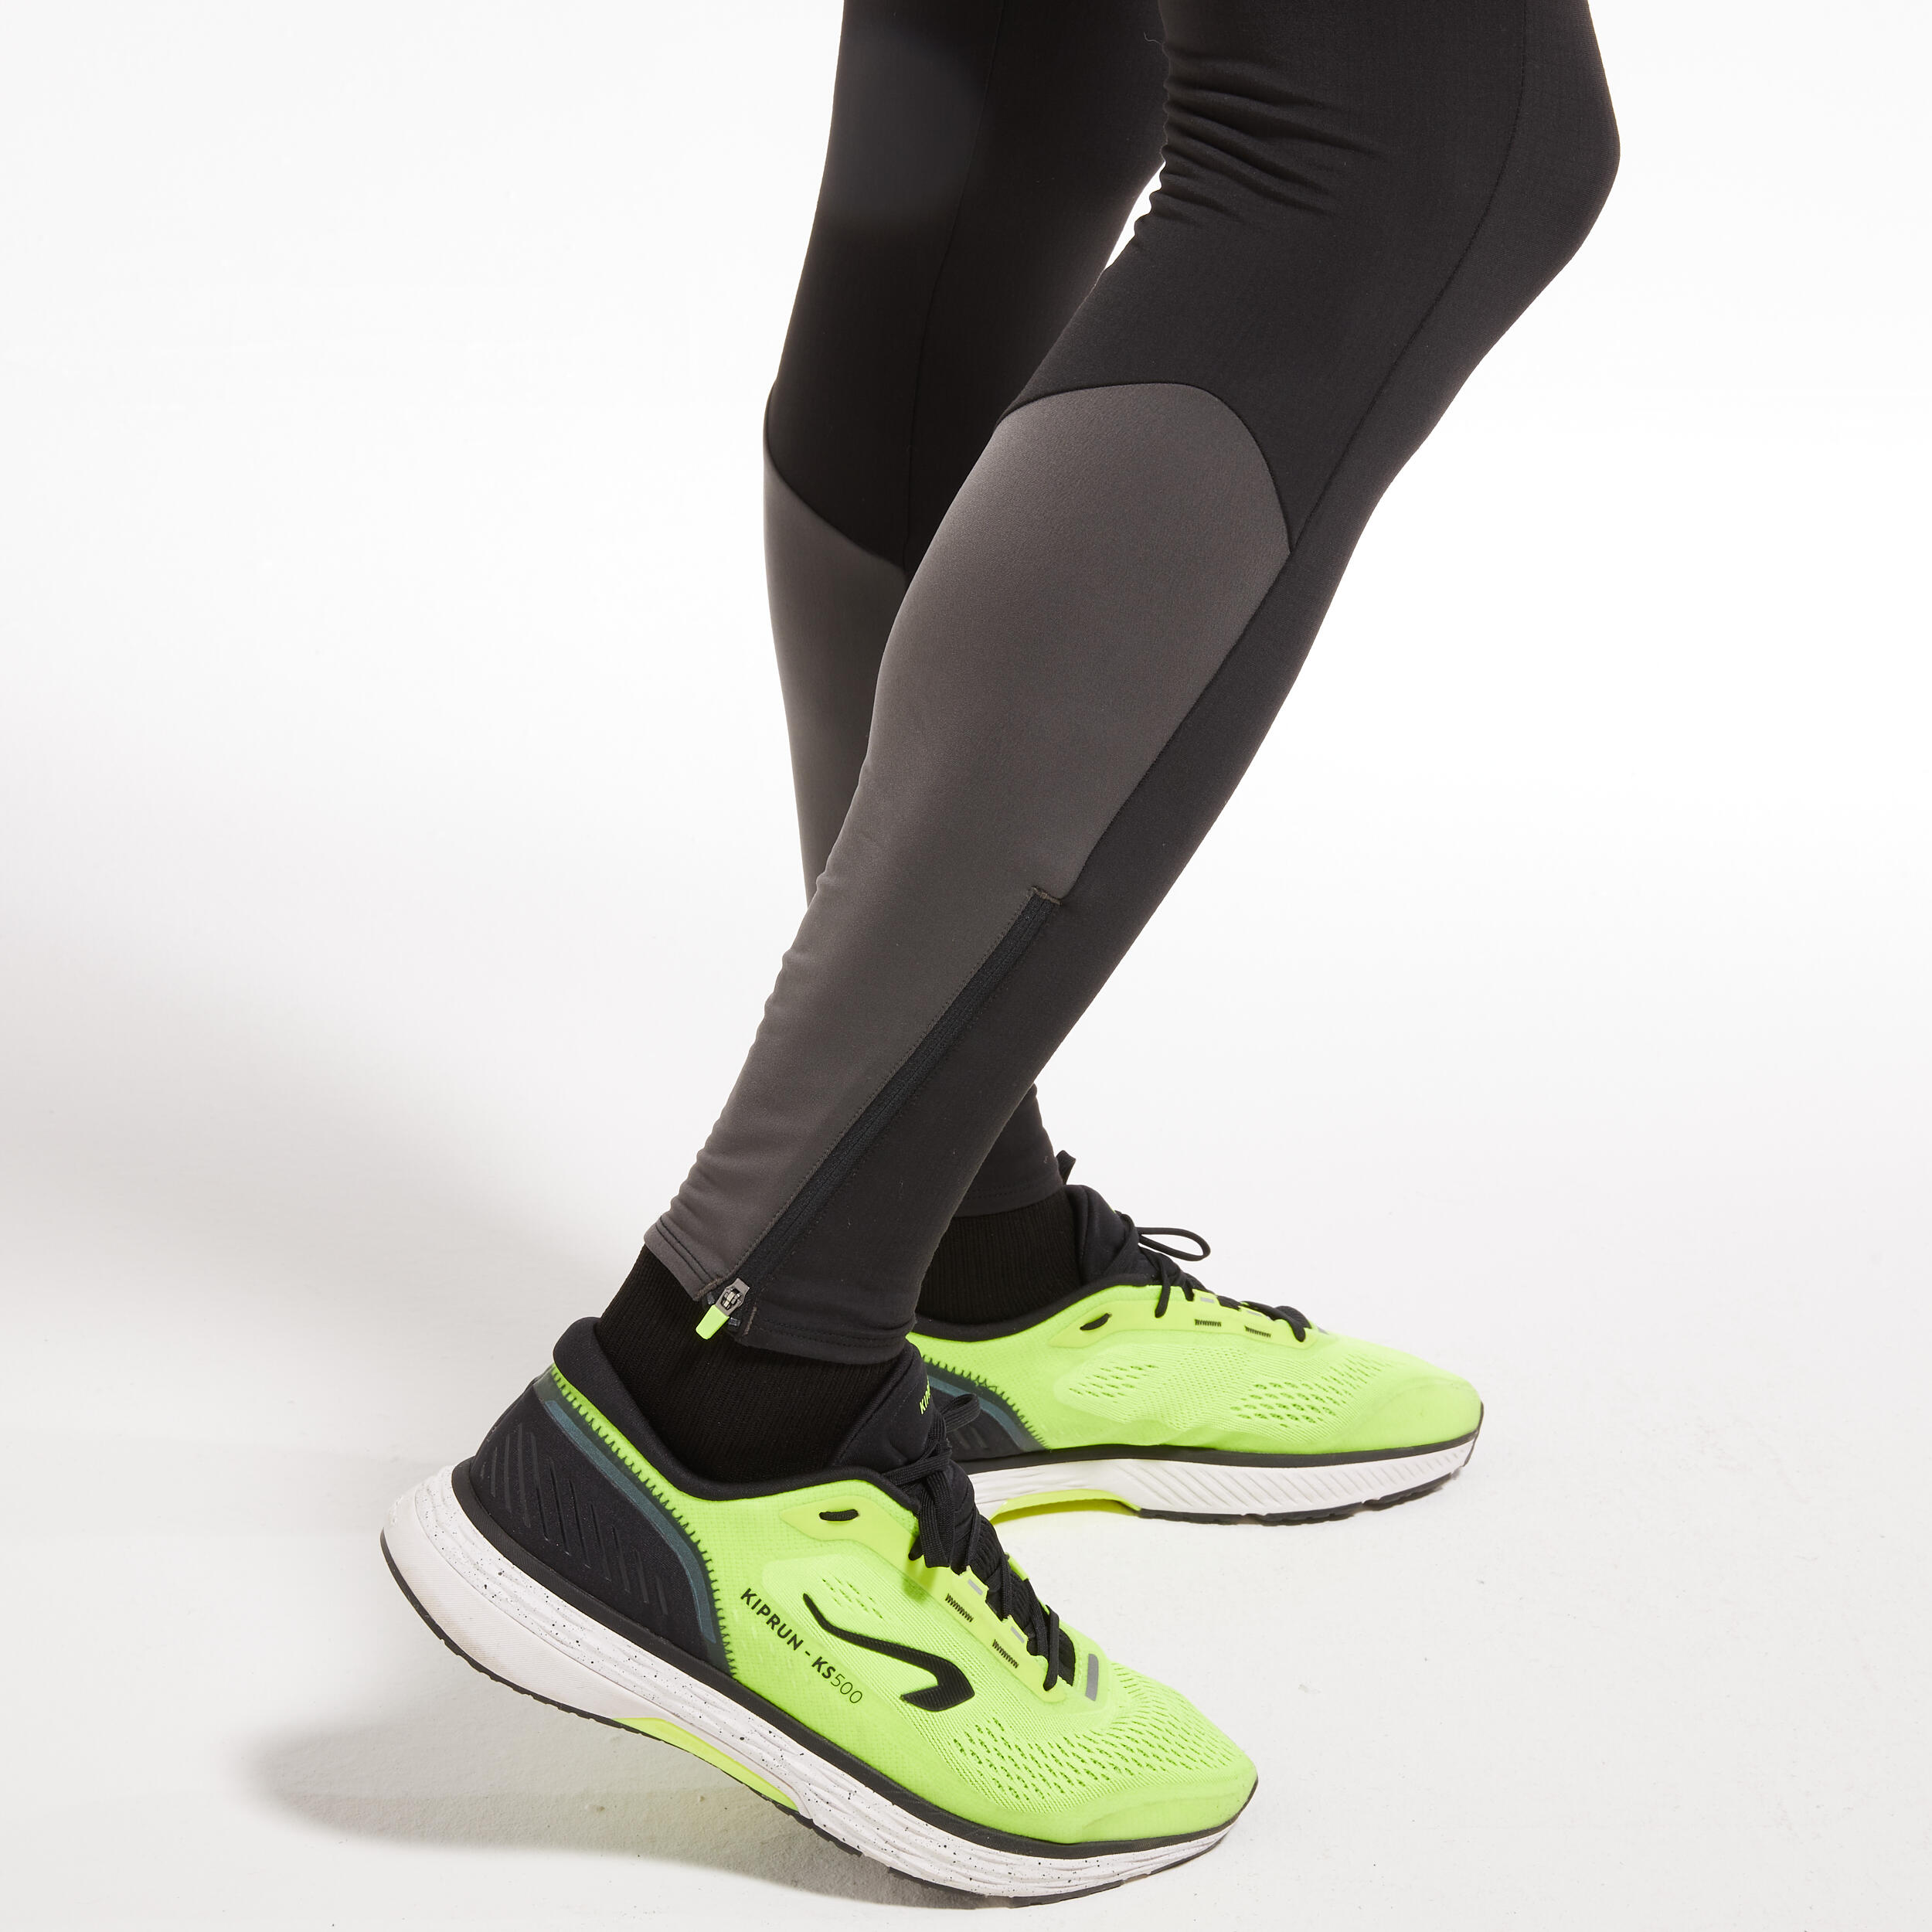 Men's Running Leggings - Warm Black/Grey - KIPRUN